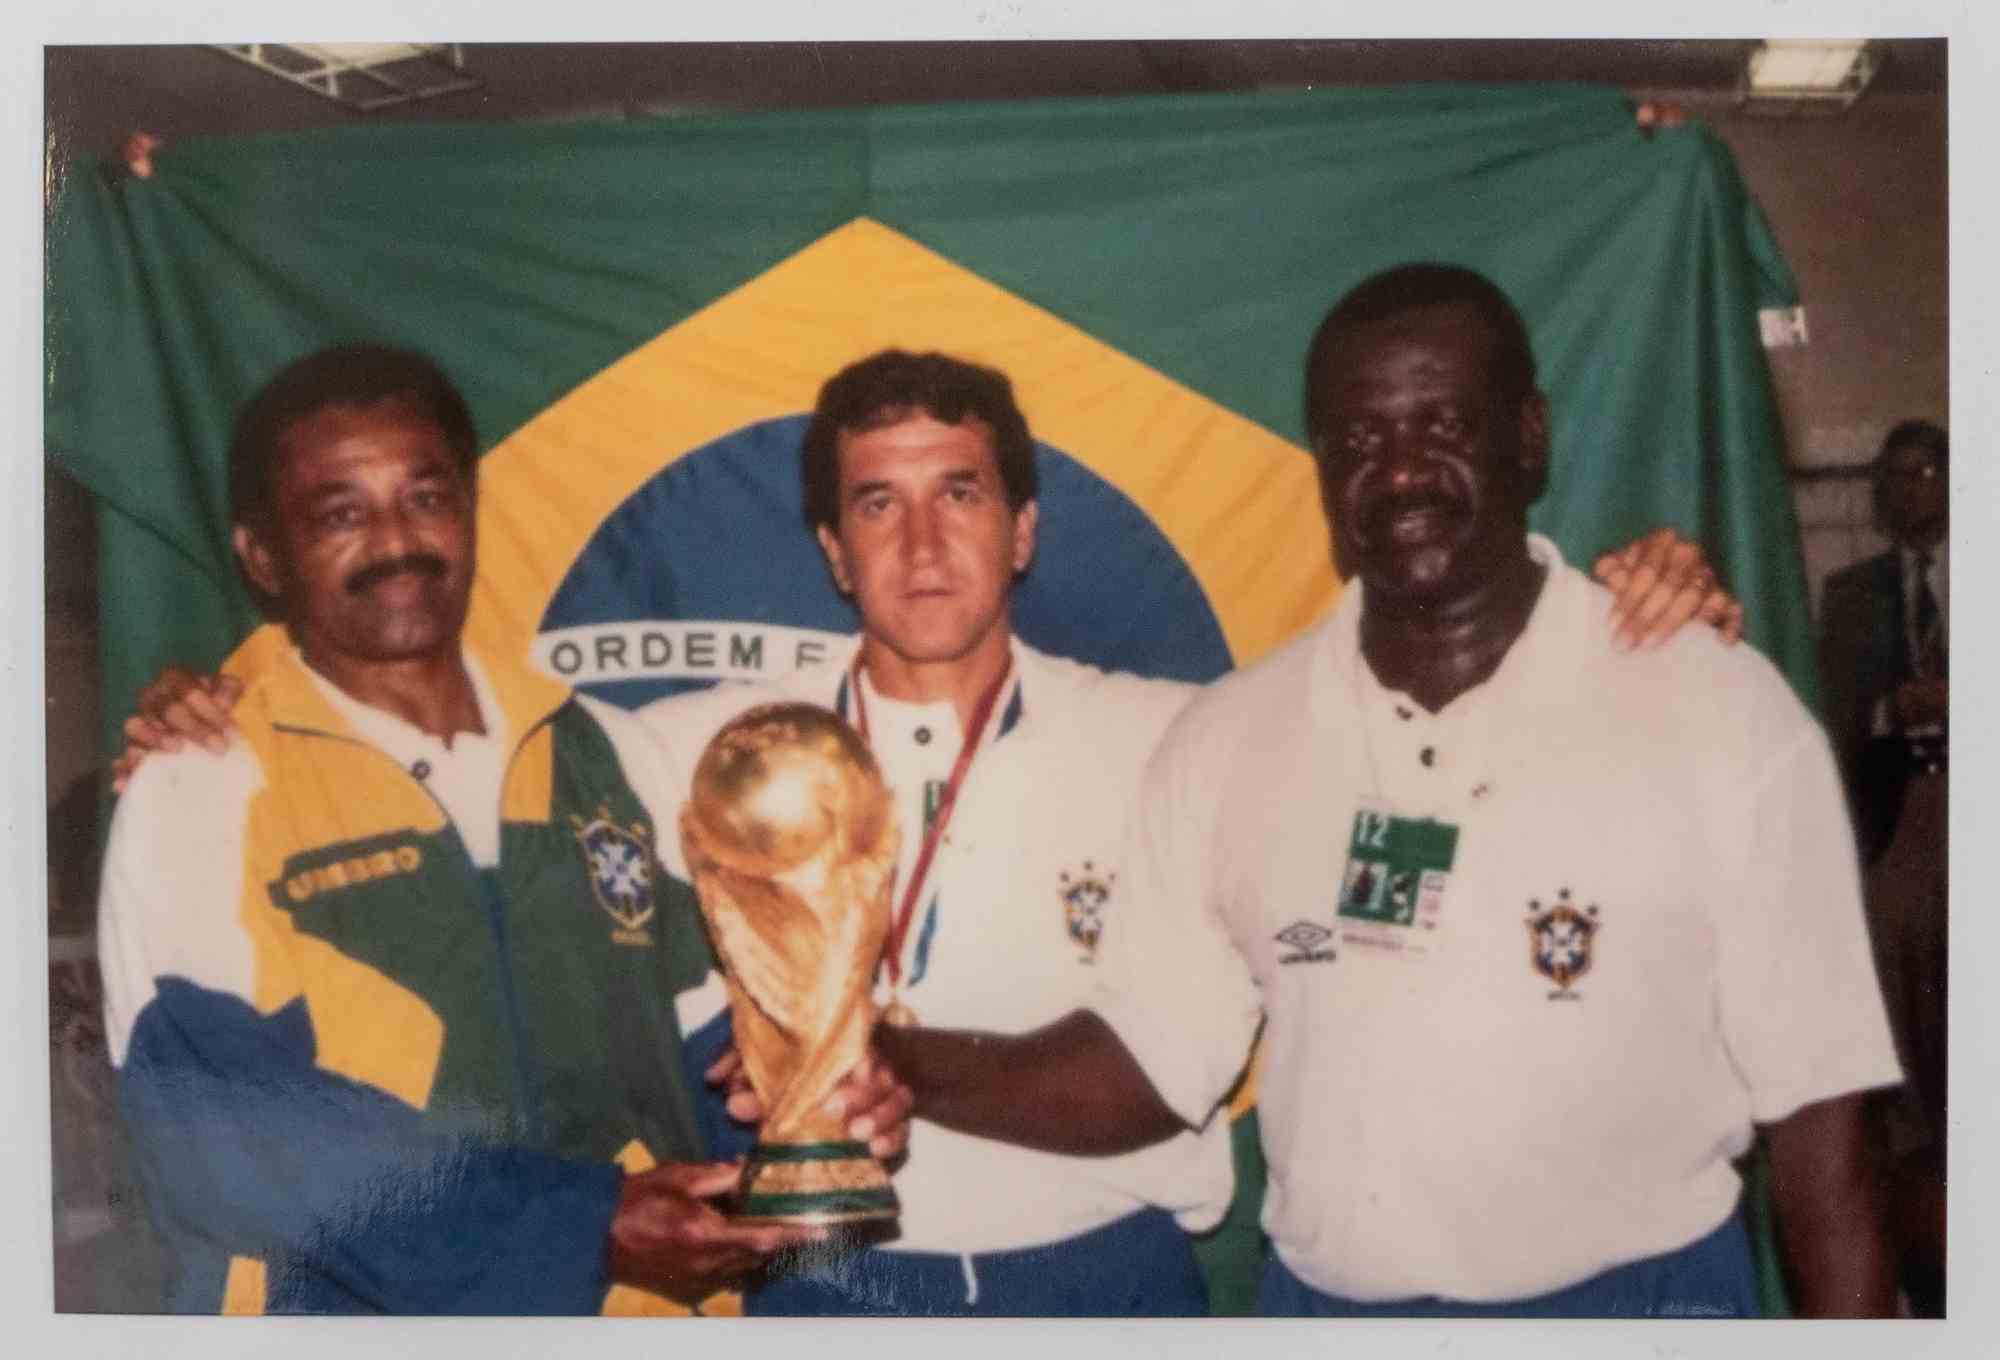 Abilio Jose de Silva with other members of the Brazilian national team